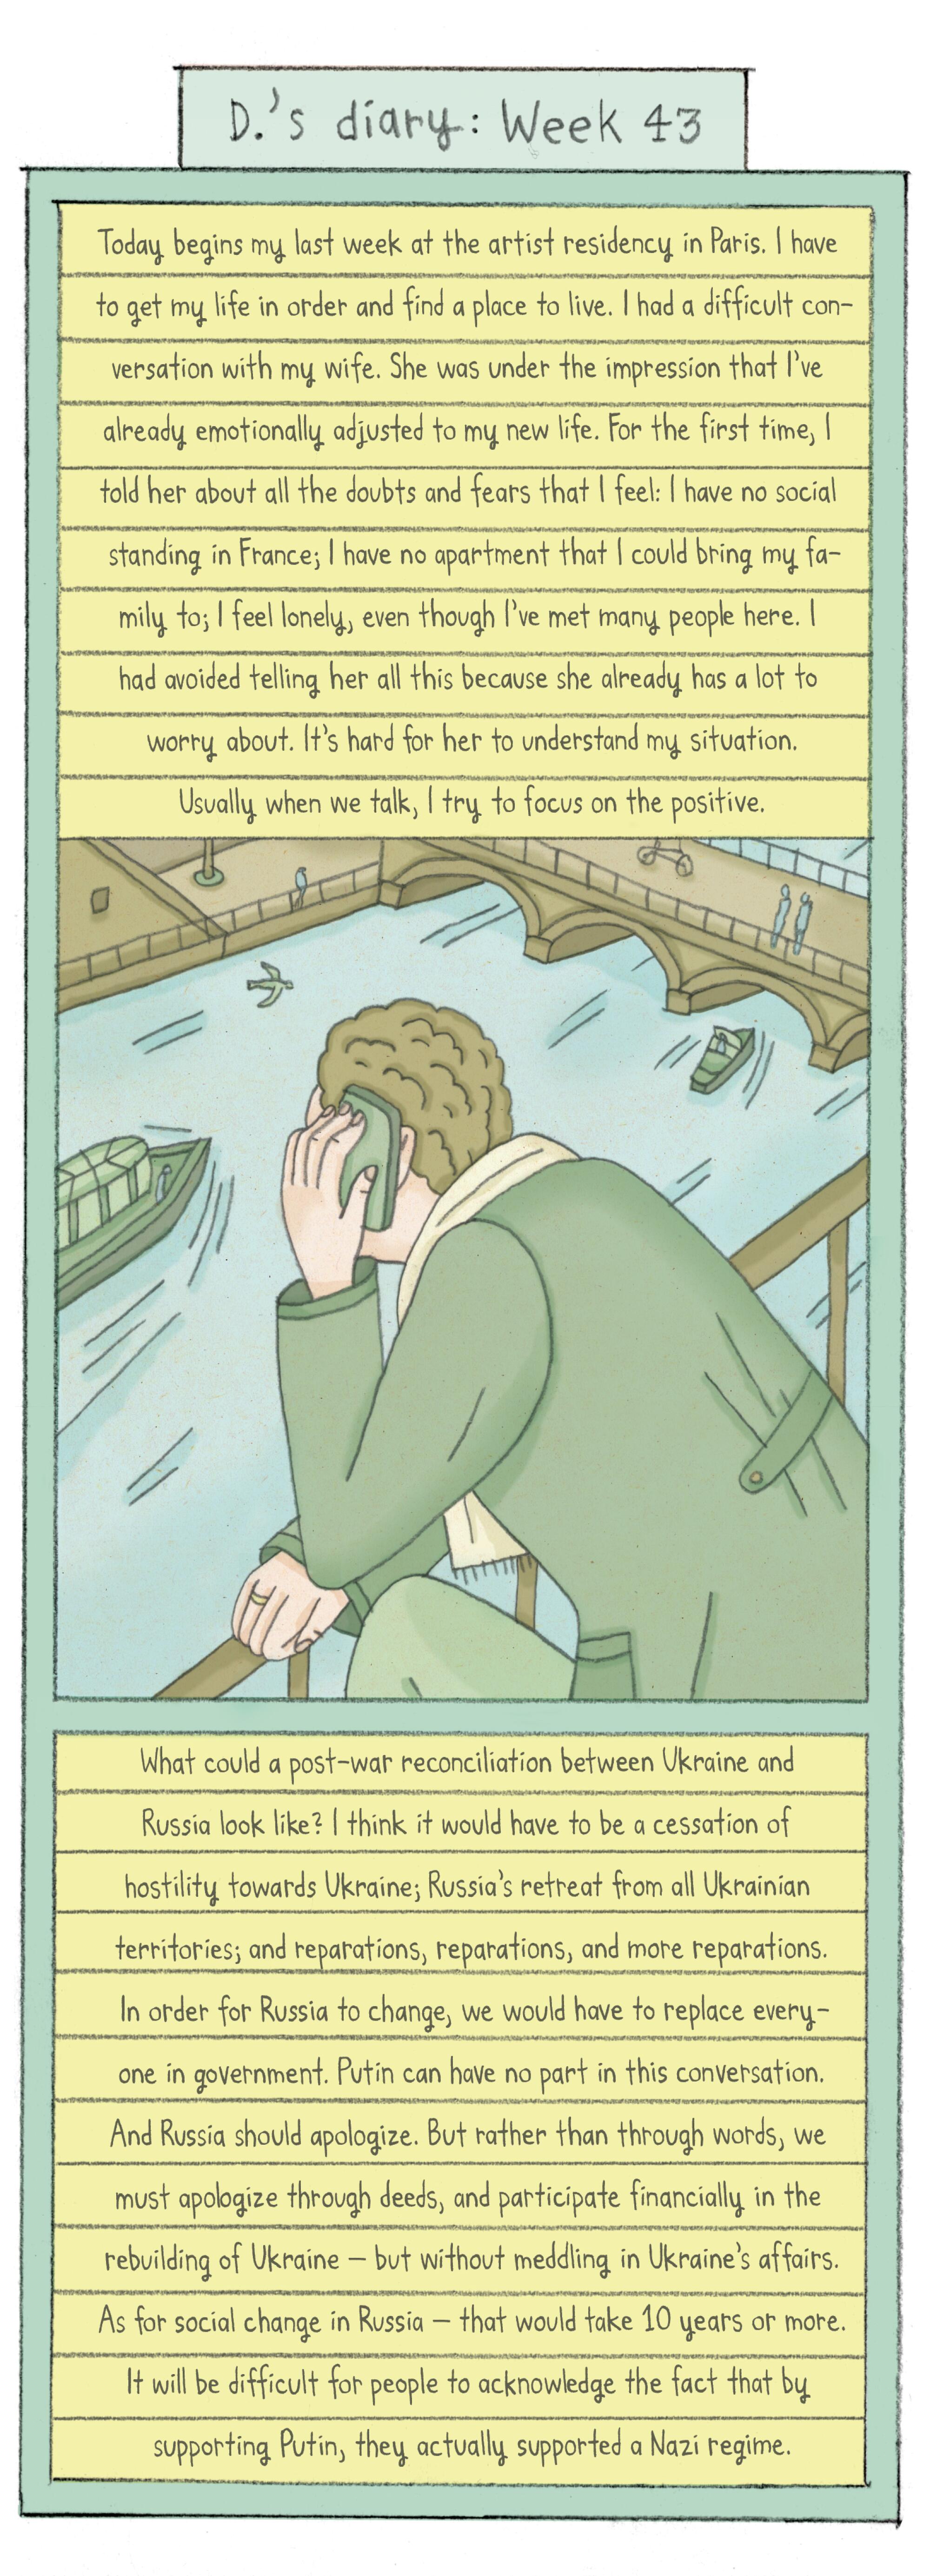 a man at a bridge railing over a river talking on a phone.